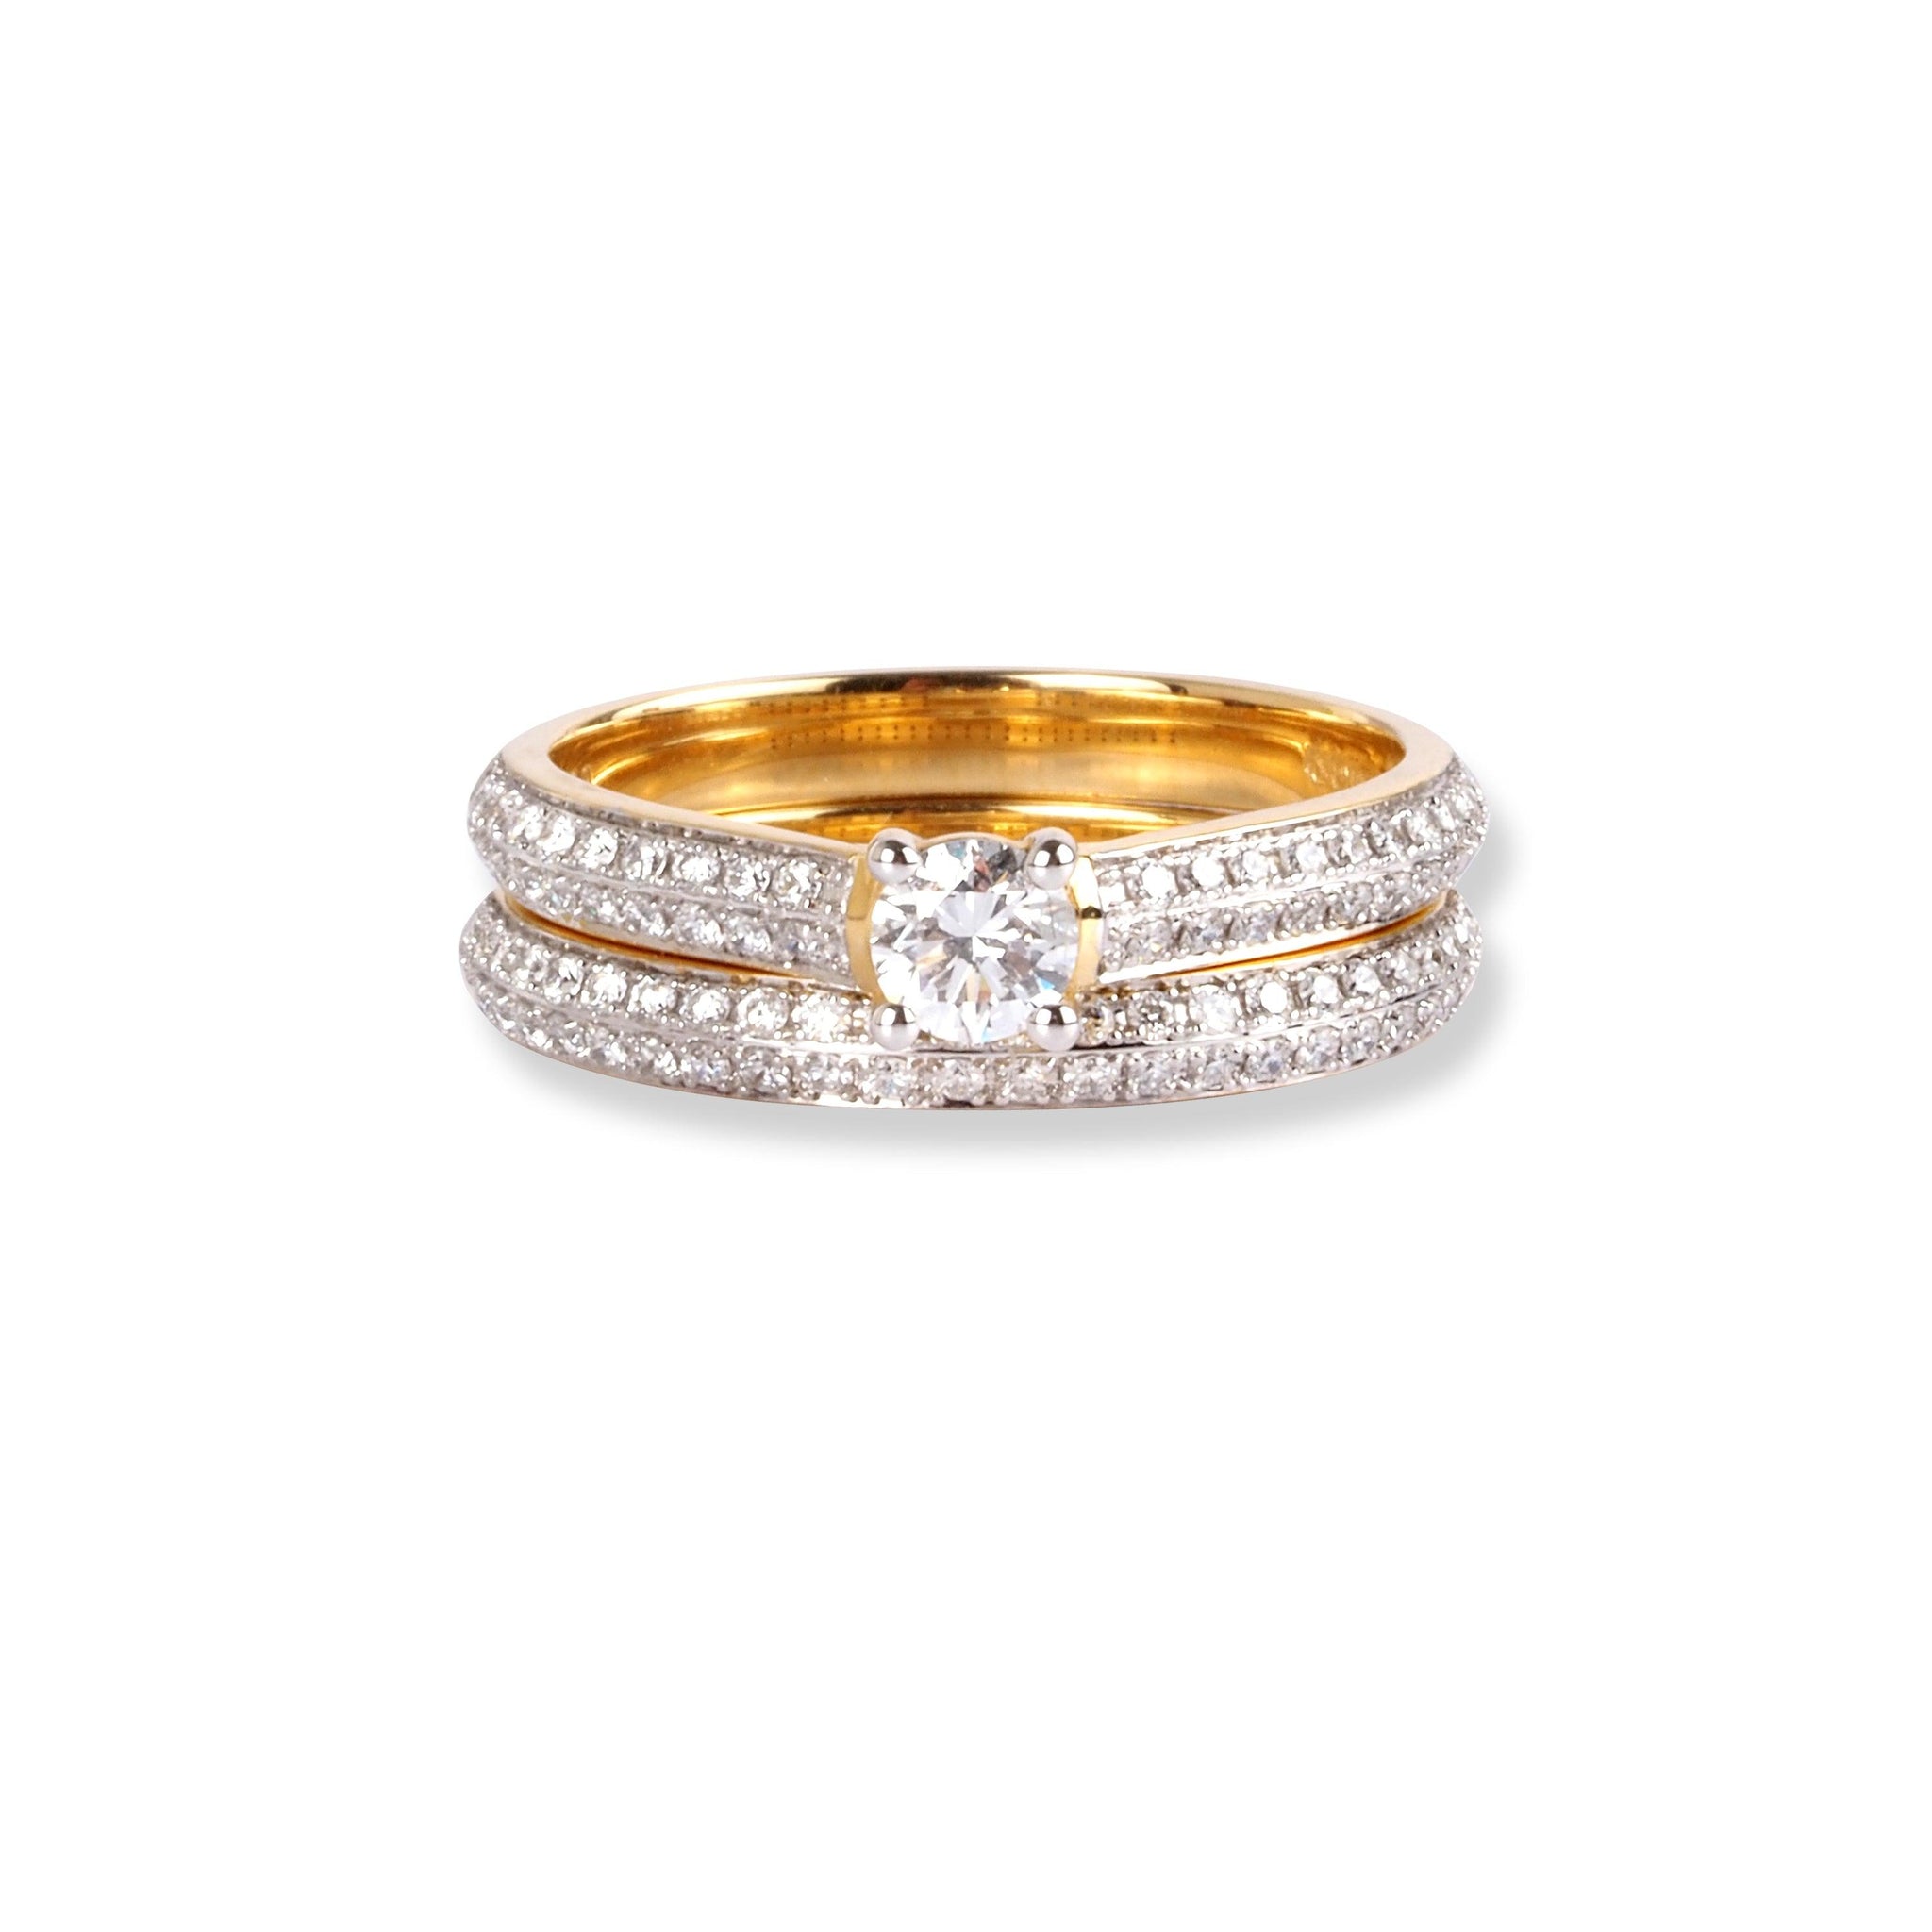 18ct Yellow Gold Diamond Engagement Ring and Wedding Band Set LR-6650